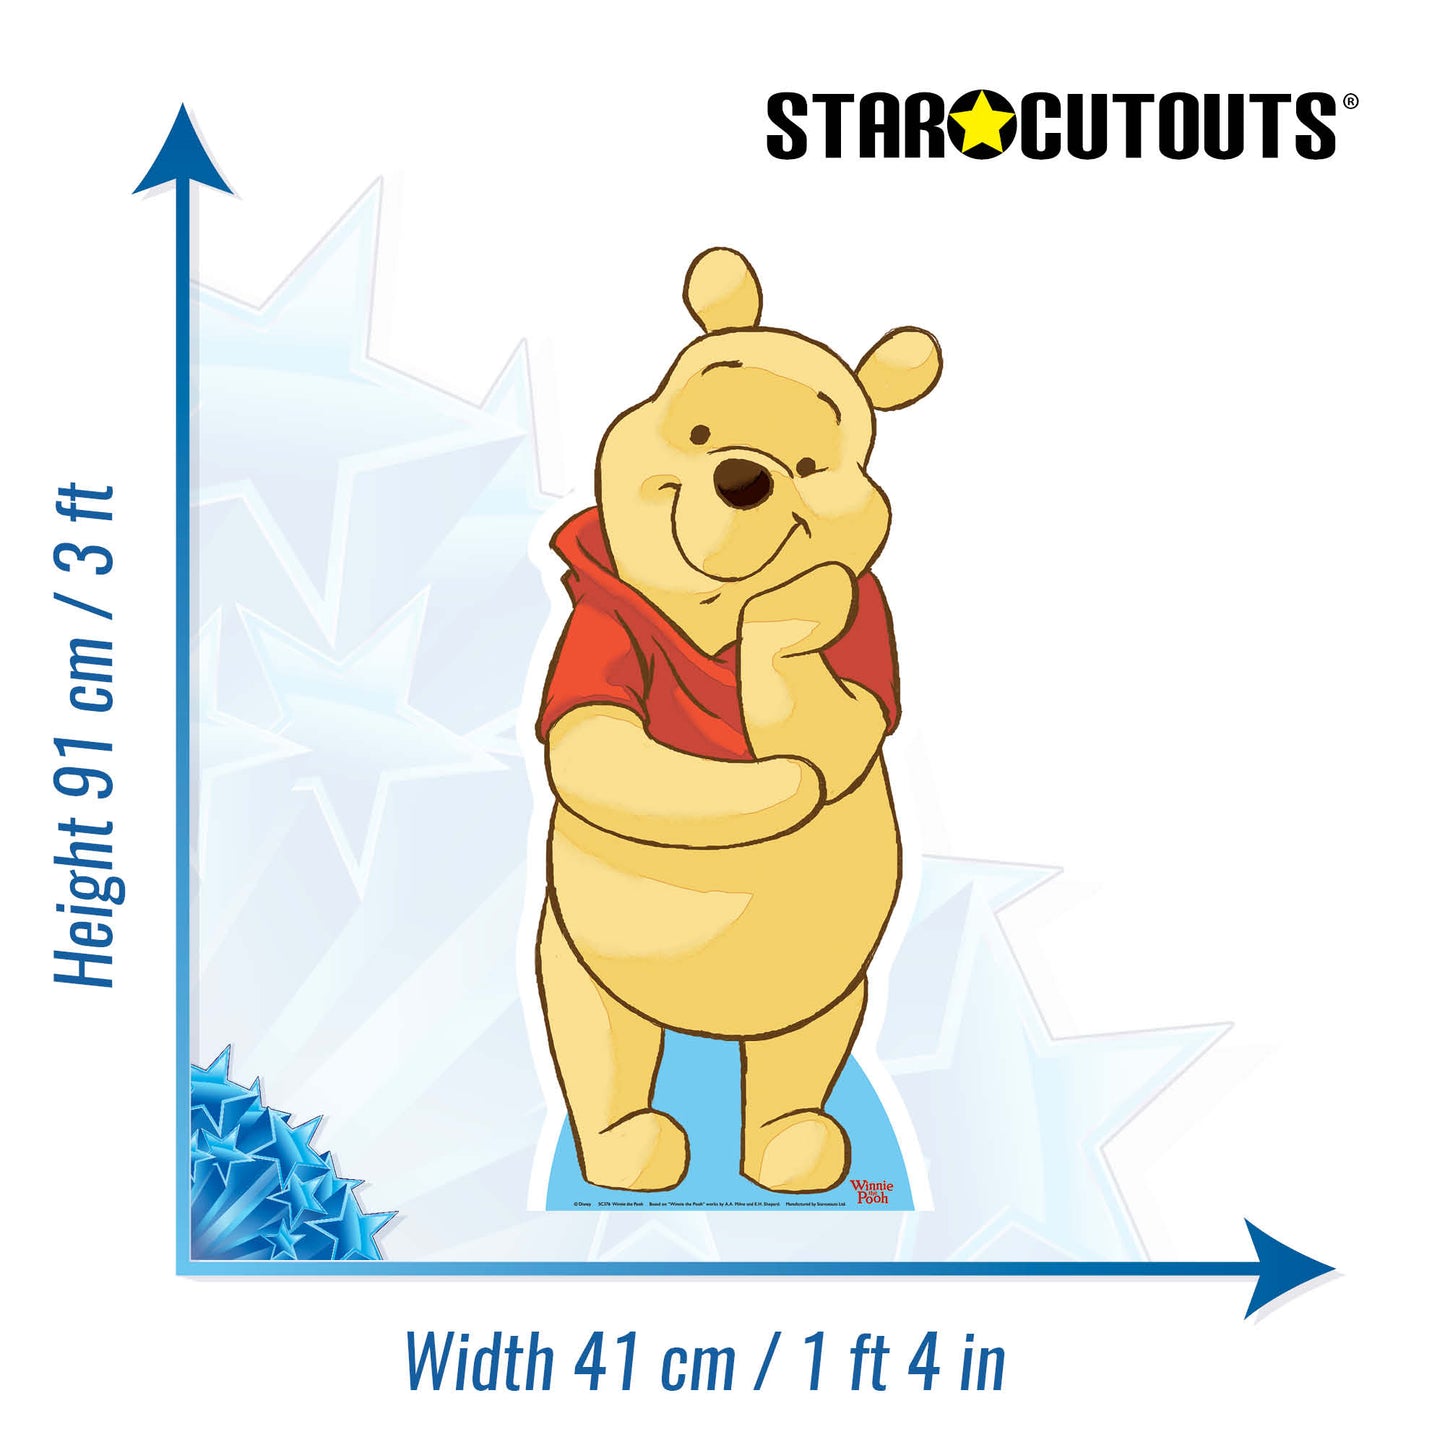 SC376 Winnie the Pooh (Star Mini Cut-out) Cardboard Cut Out Height 91cm